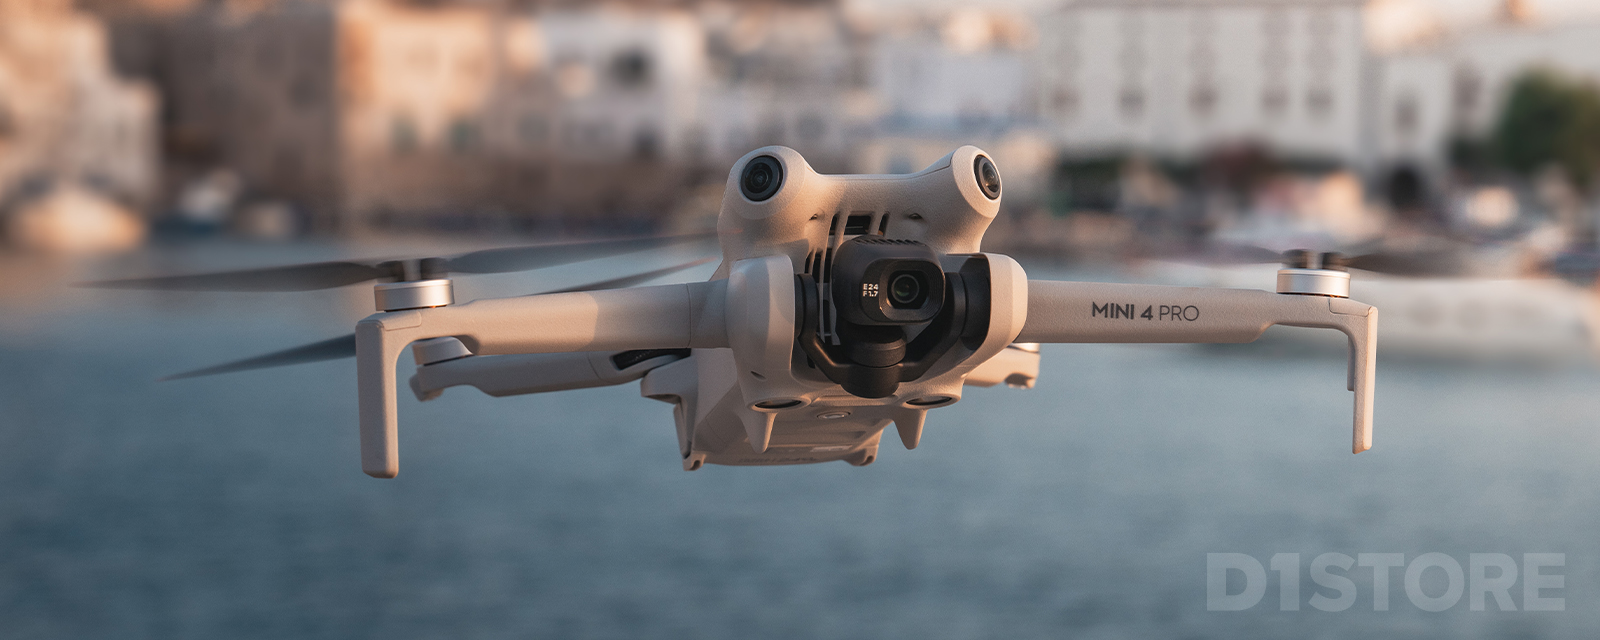 DJI Mini 4 Pro drone in flight